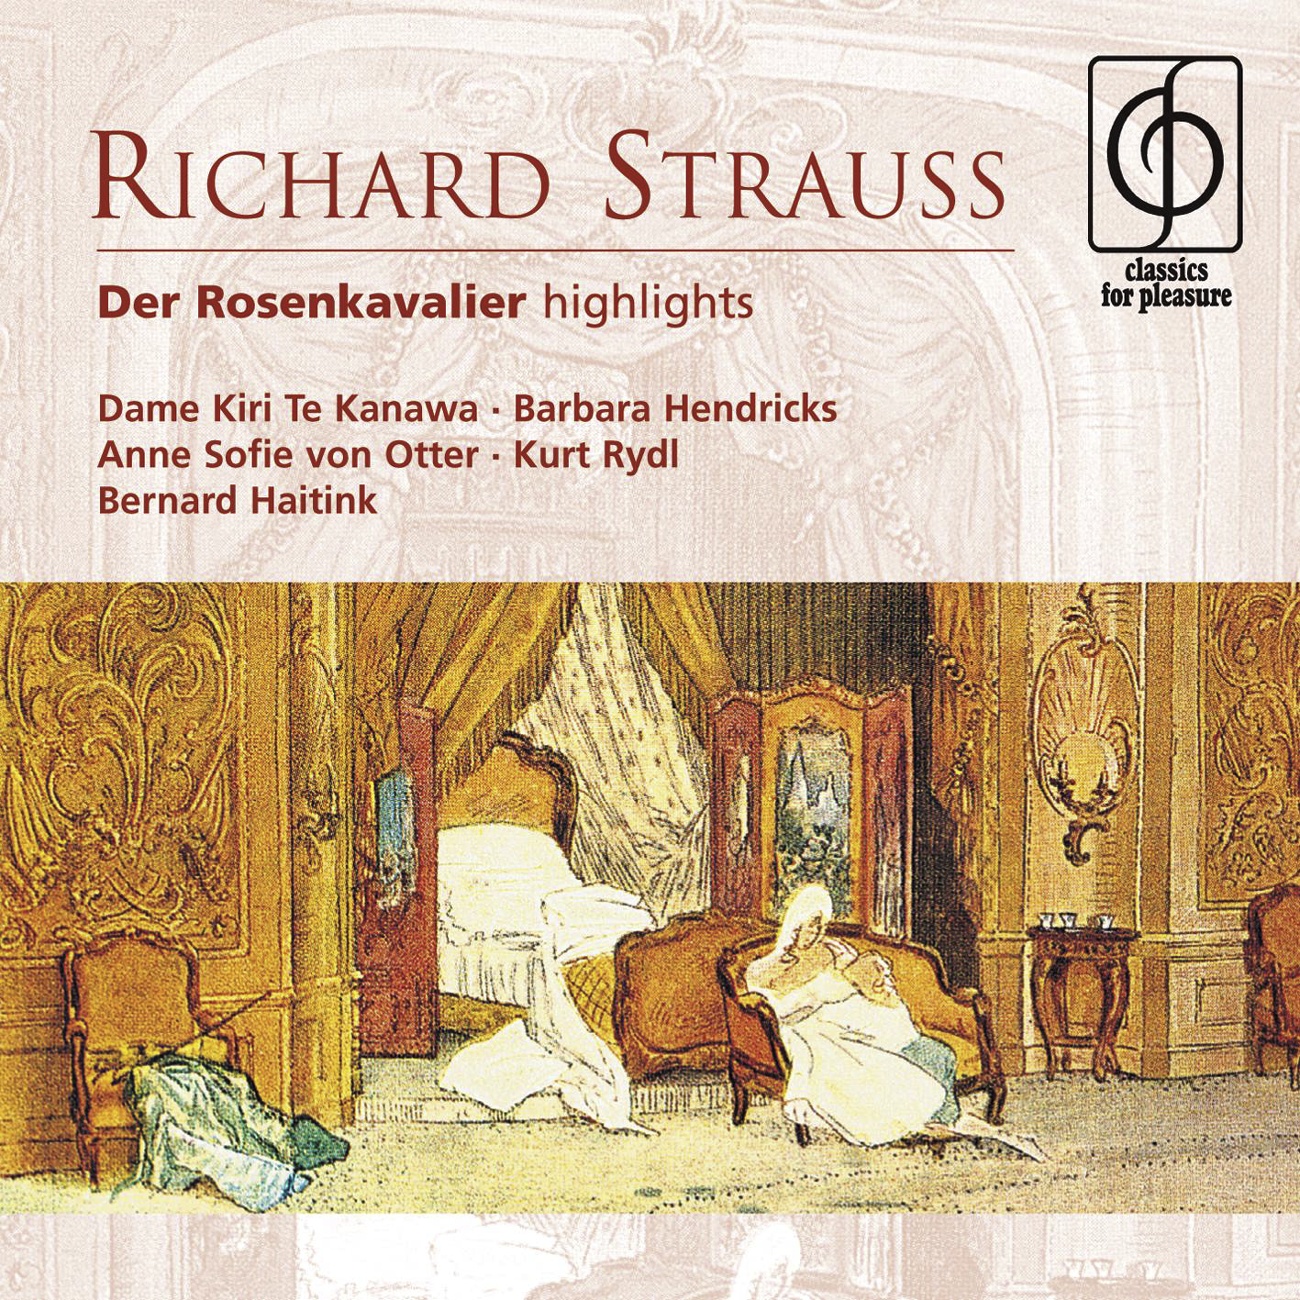 Der Rosenkavalier (highlights), Act II: Da lieg' ich! (Baron Ochs, Servants)...